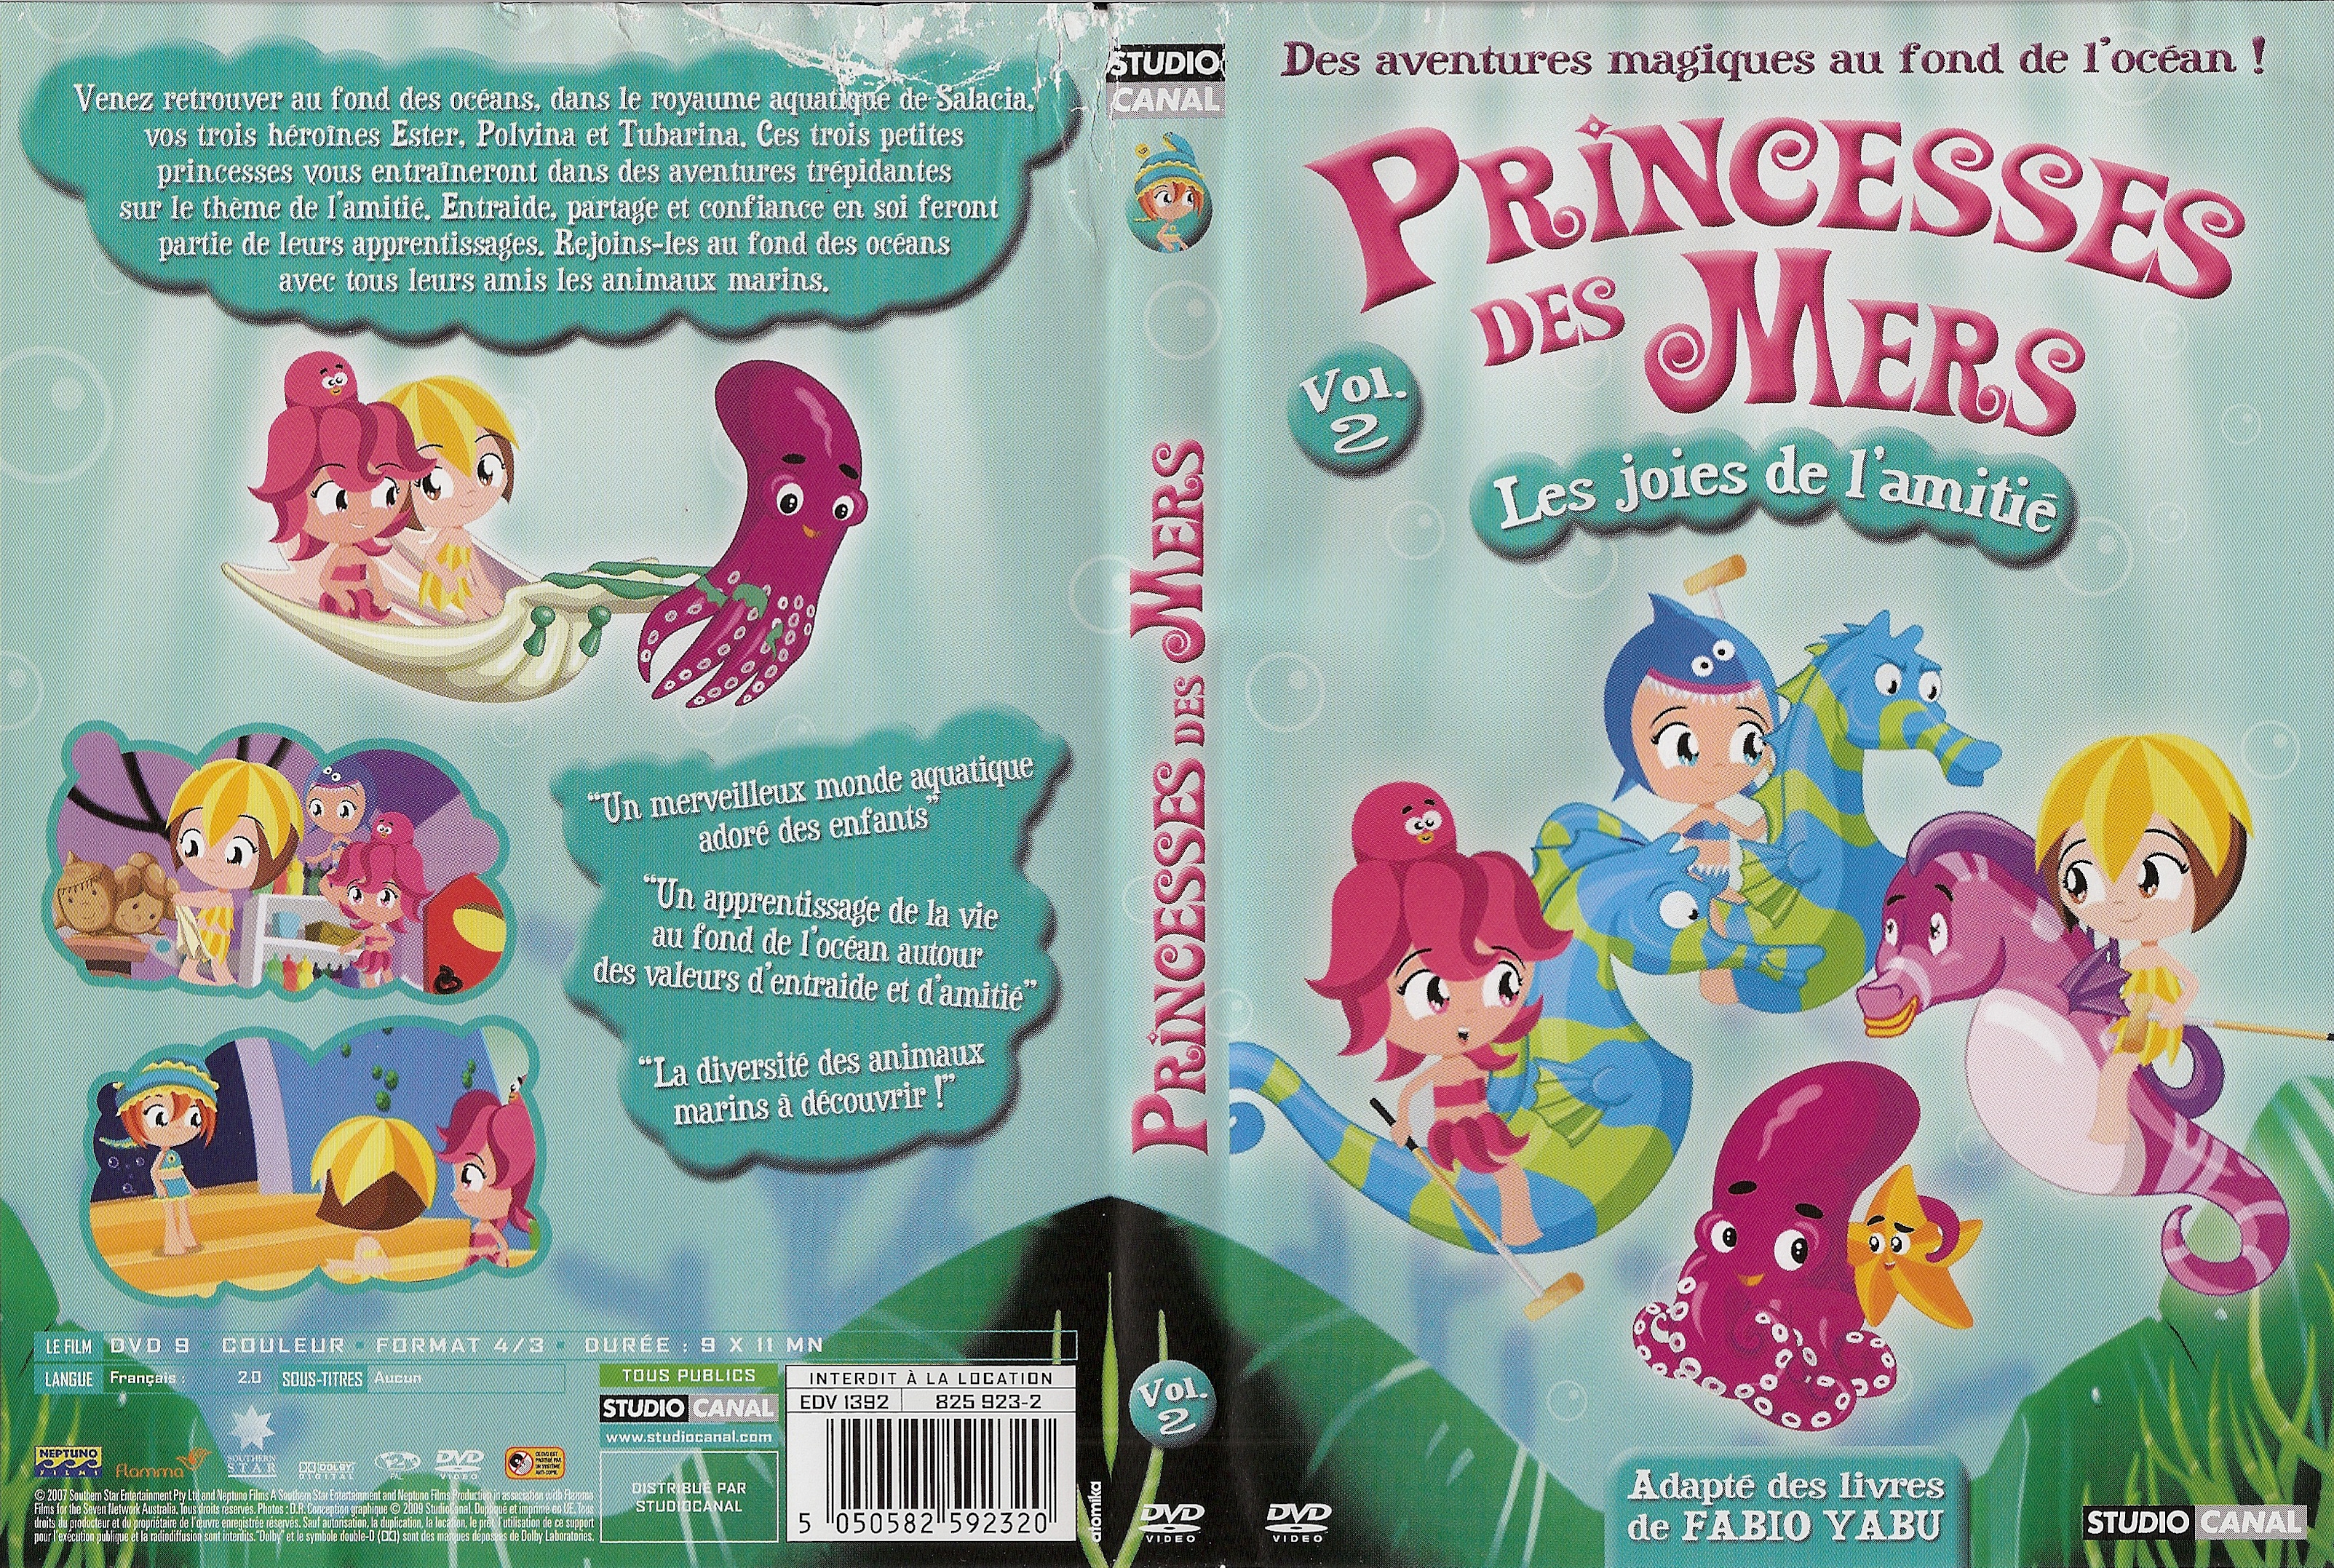 Jaquette DVD Princesses des mers vol 02 - Les joies de l